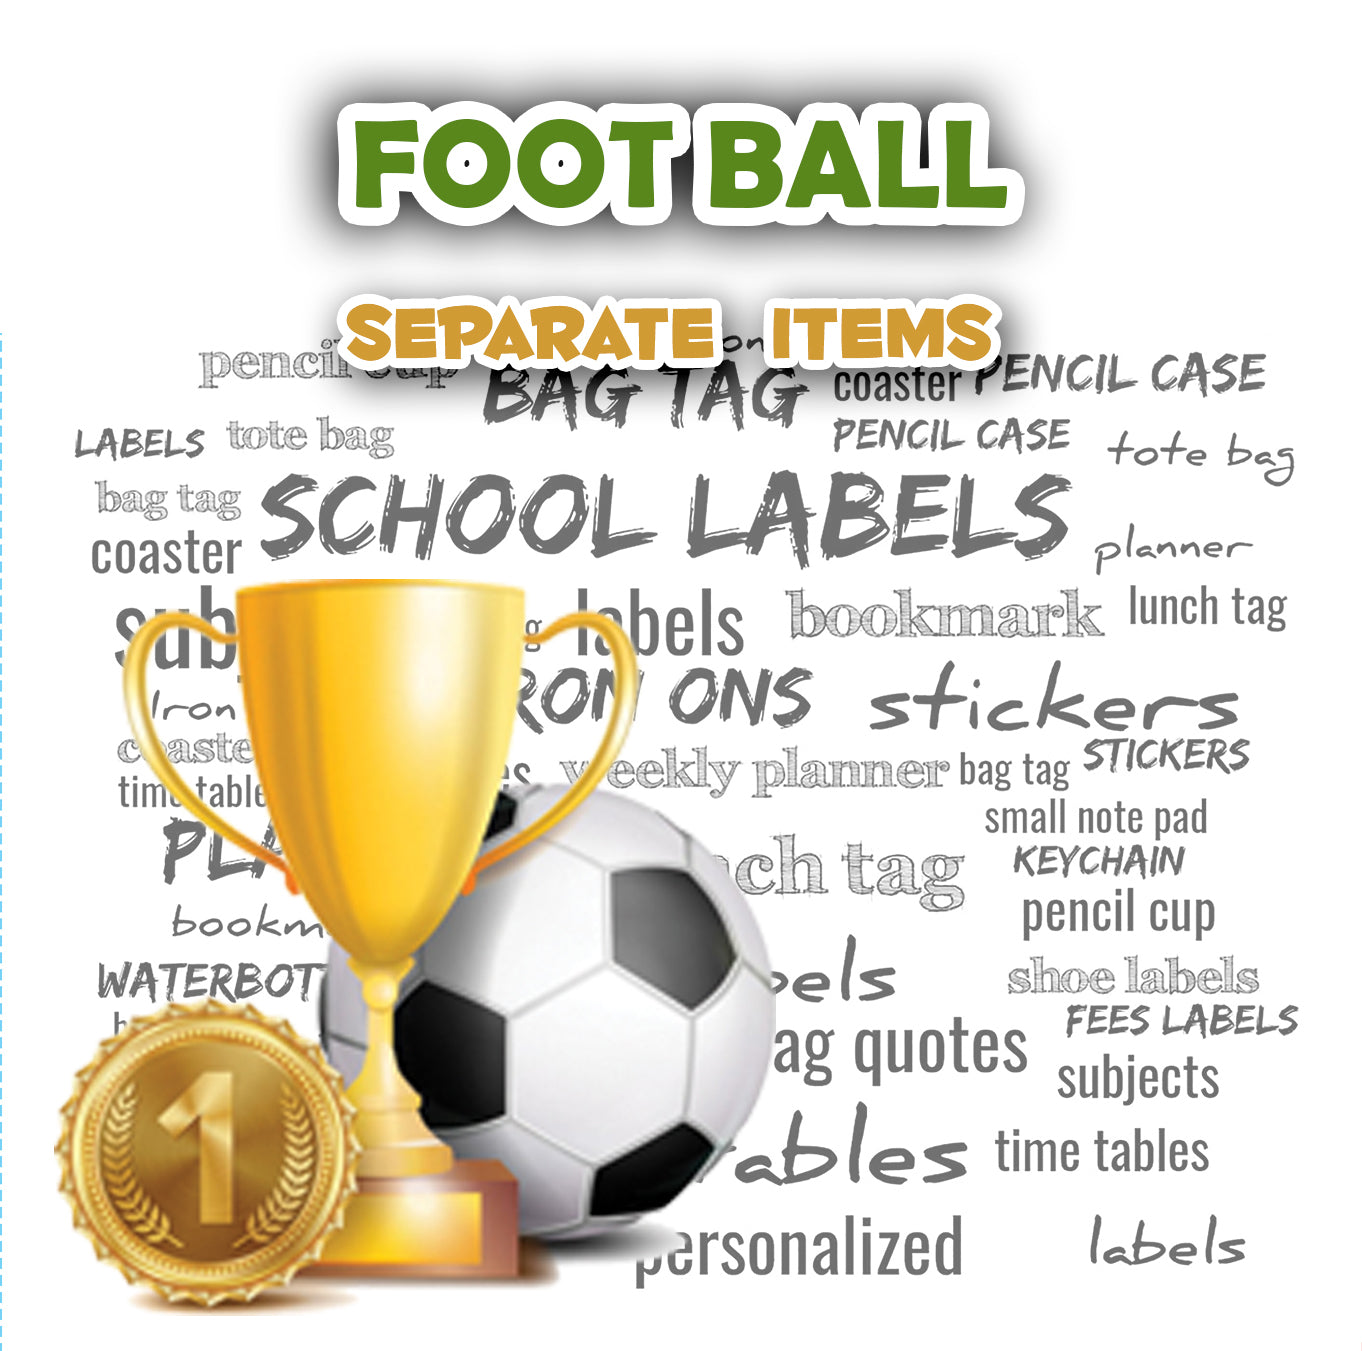 ""Football" Separate items